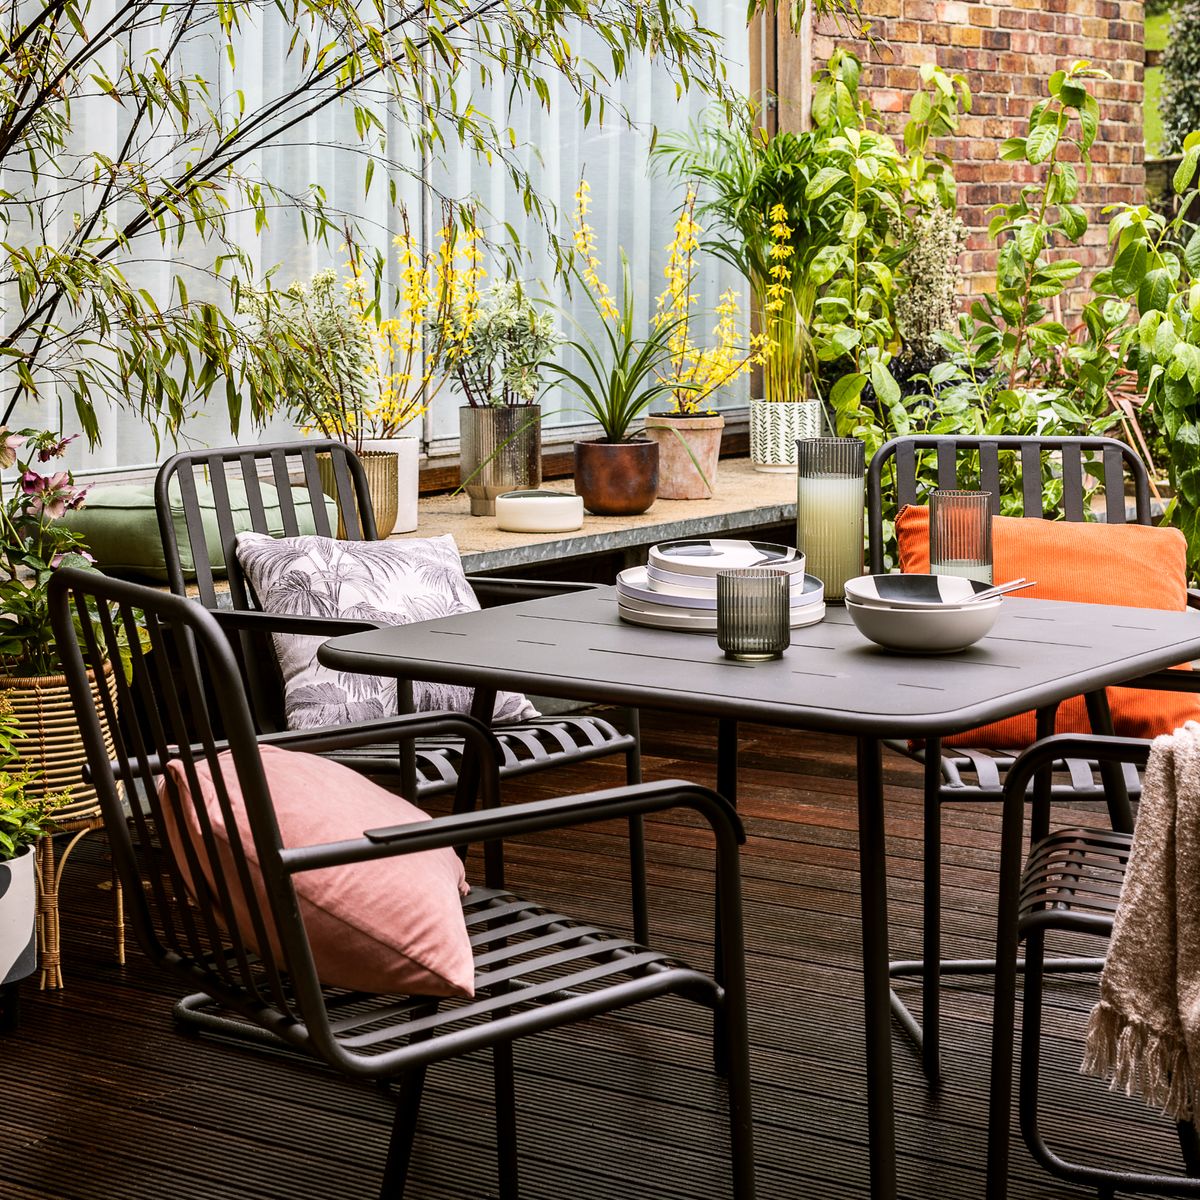 How to arrange outdoor furniture for small garden socialising